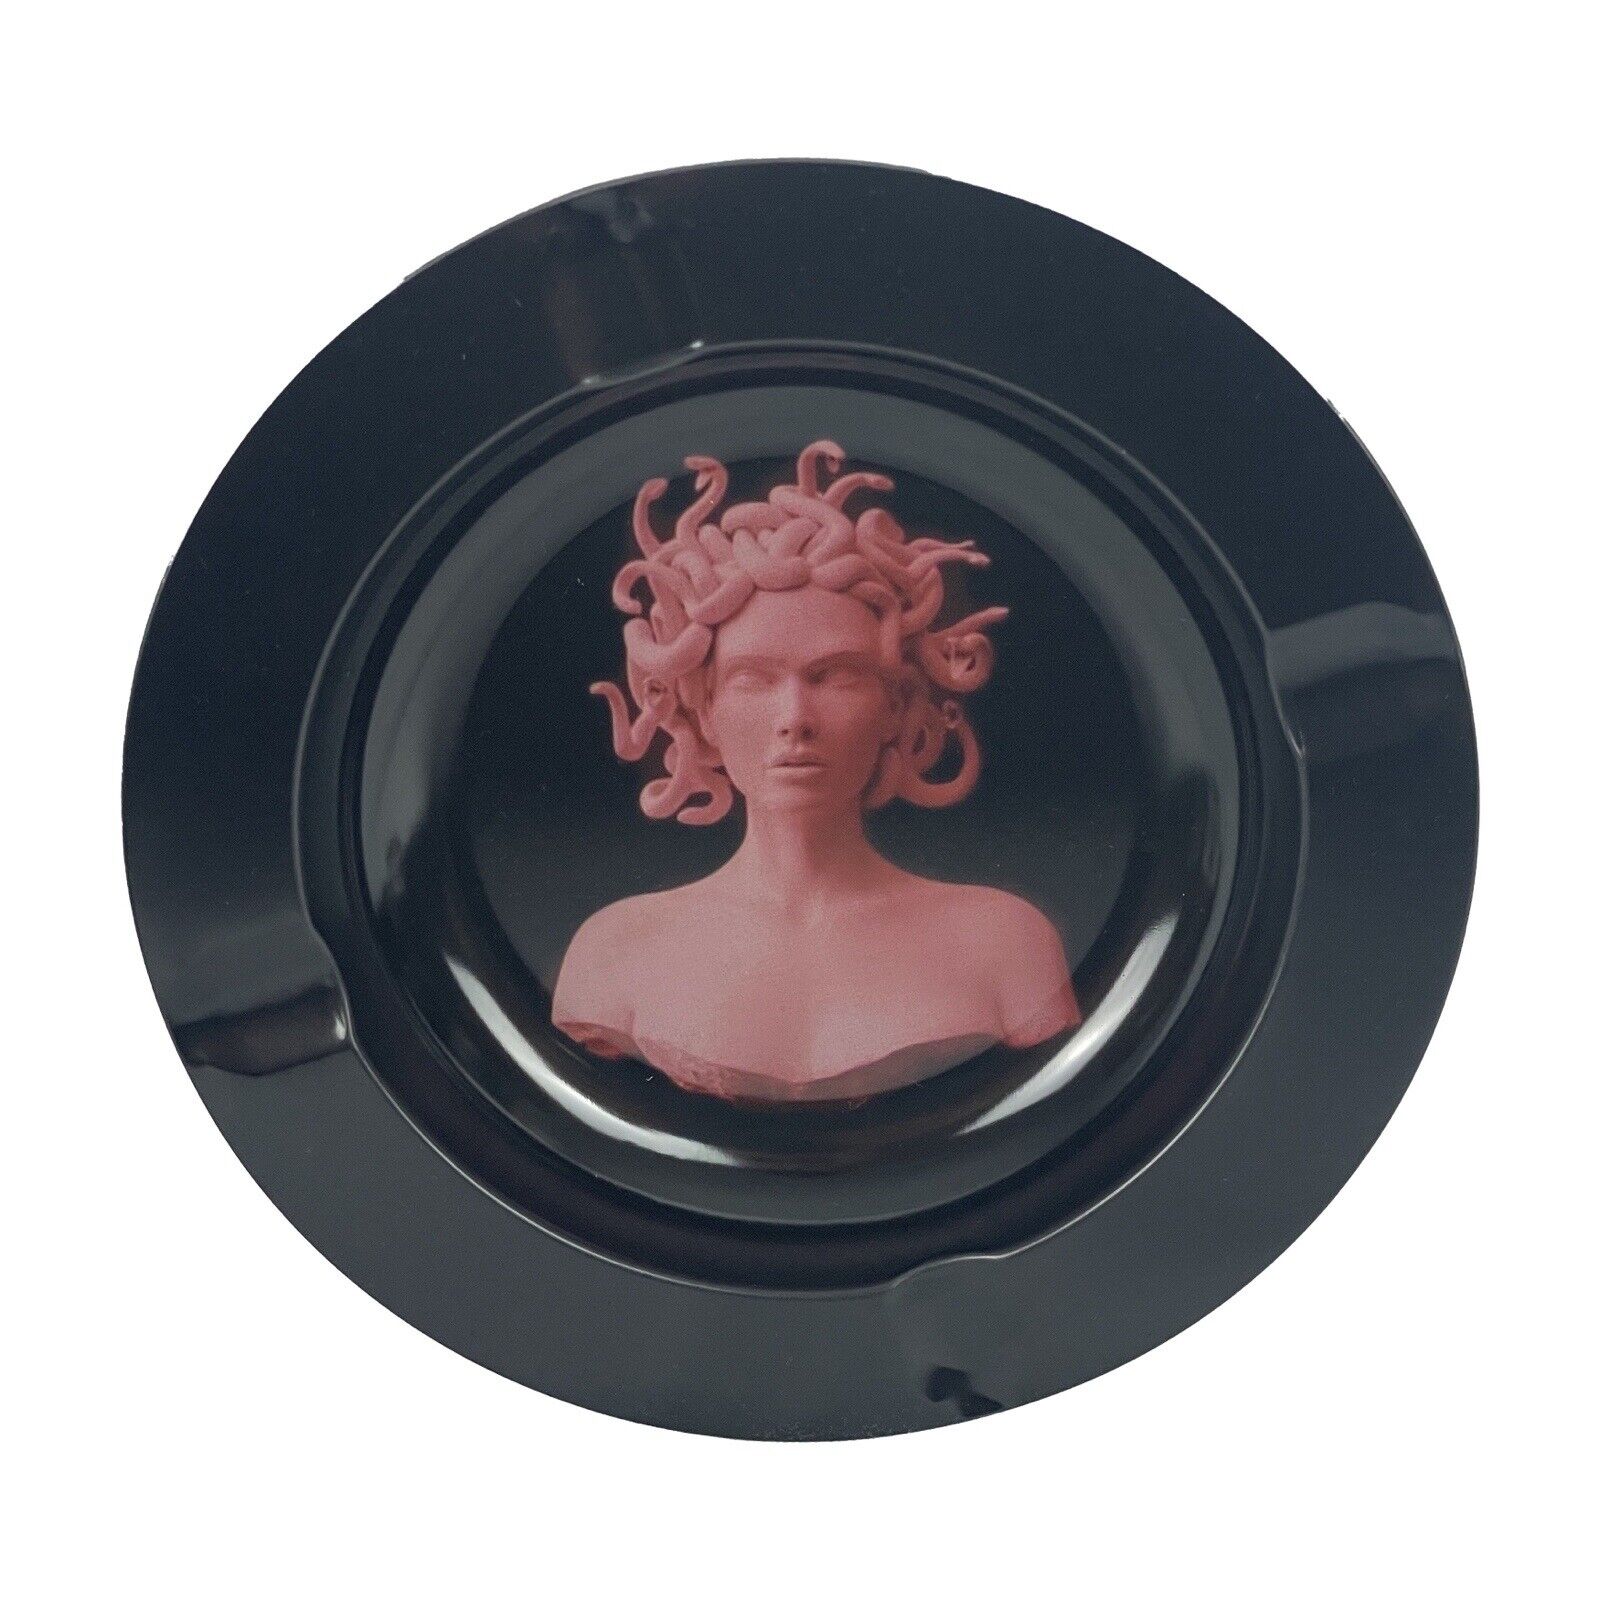 Ashtray “Pink Medusa” 5.5” Circle Metal Tray Tobacco Smoke Accessories